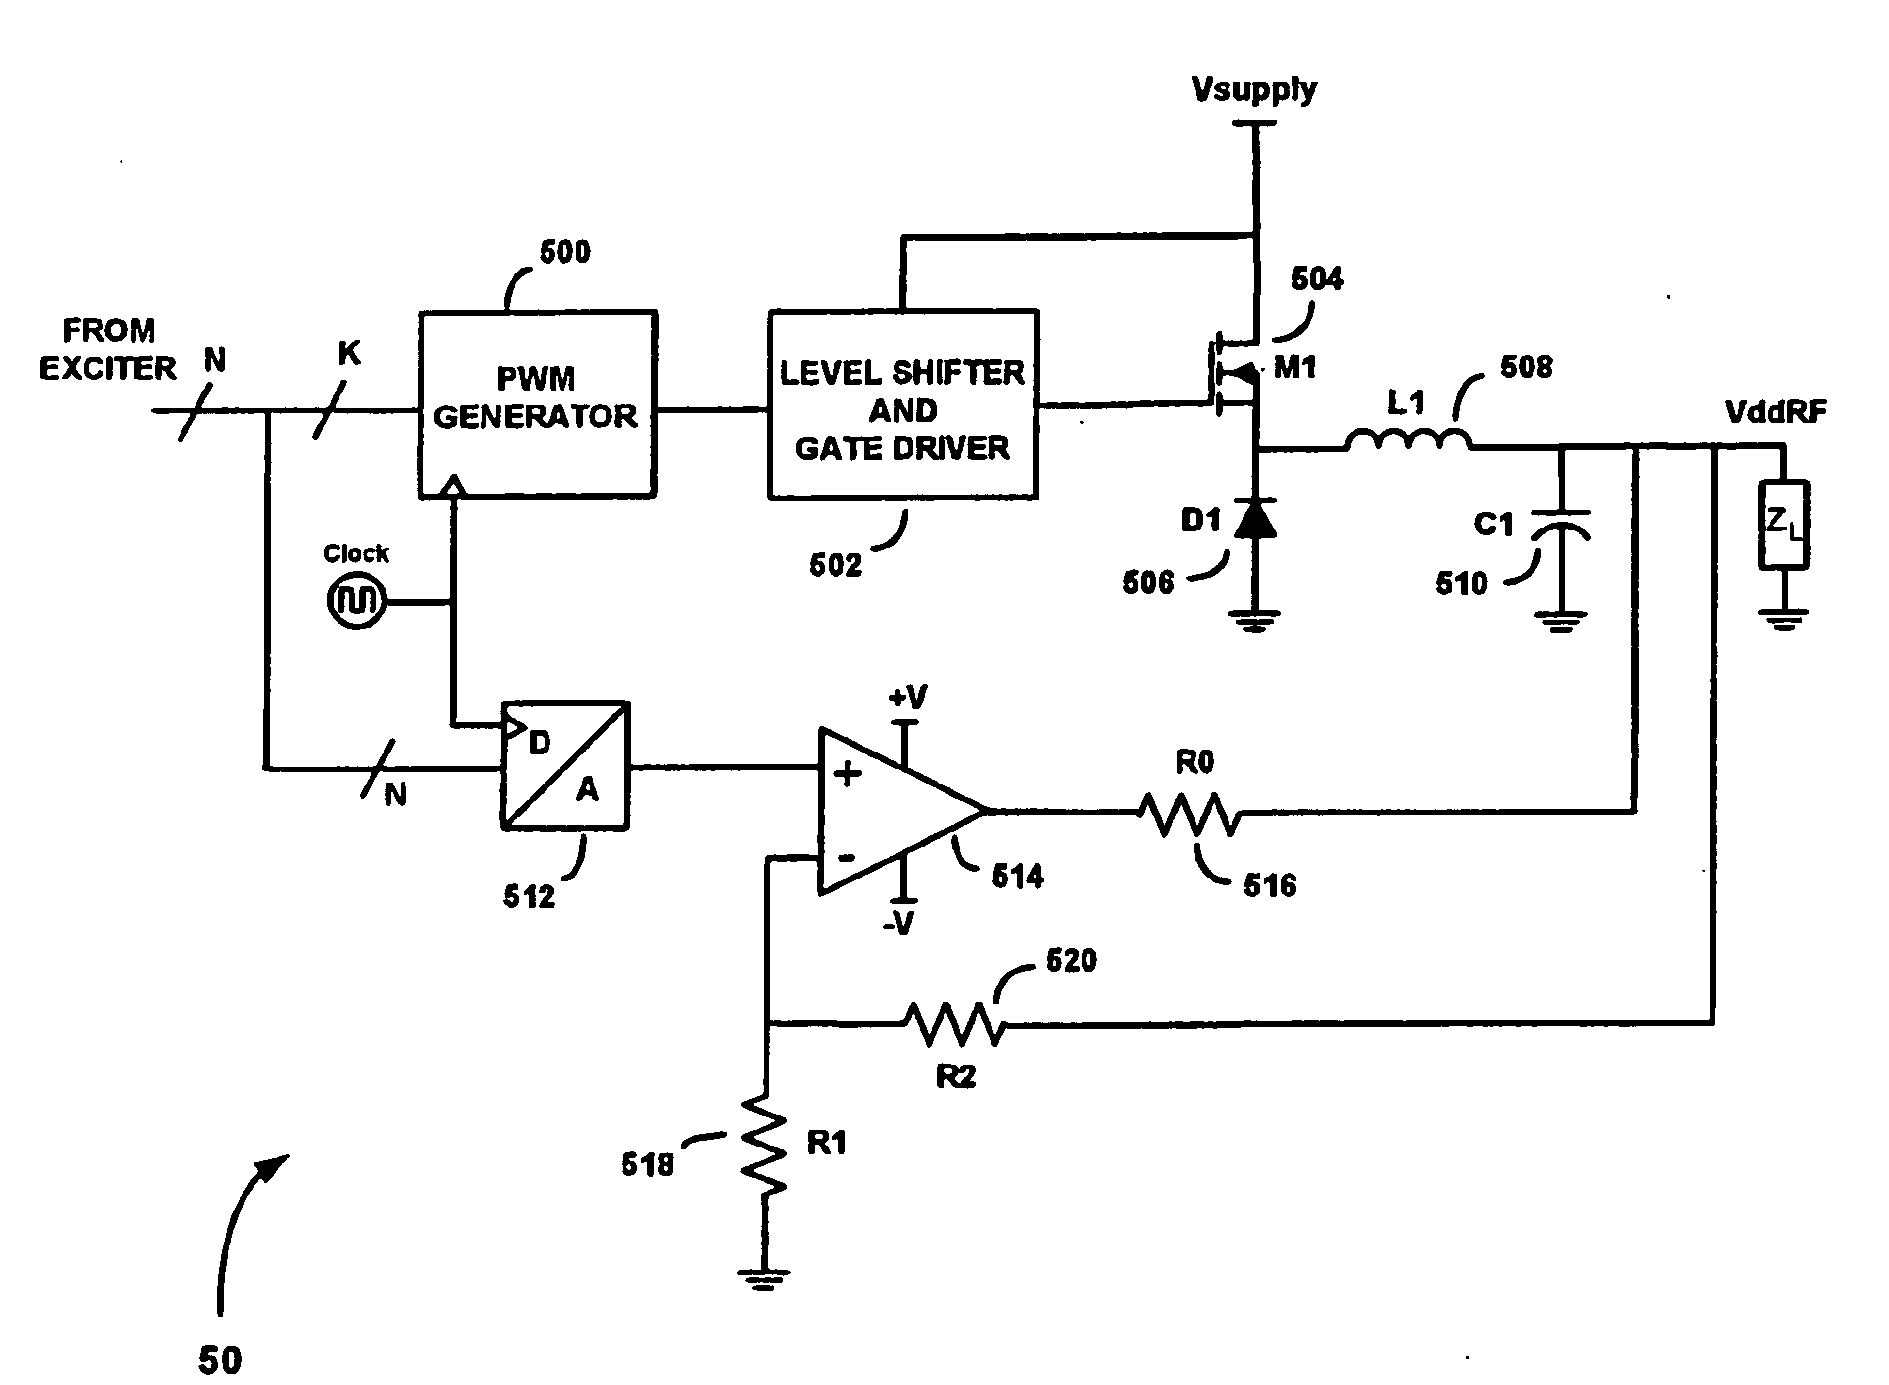 Enhanced hybrid class-S modulator